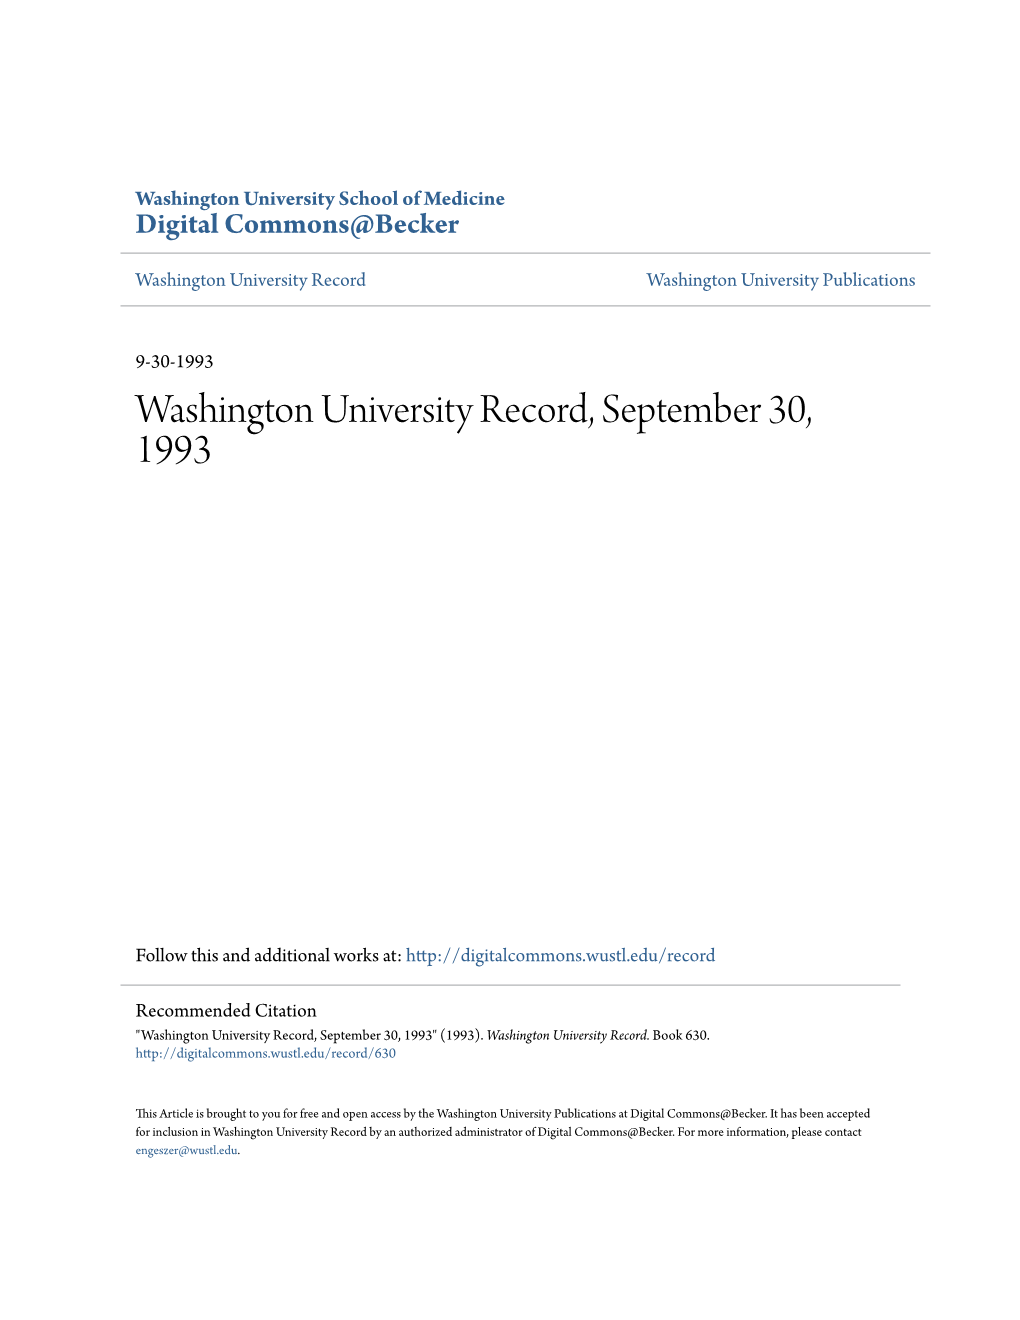 Washington University Record, September 30, 1993